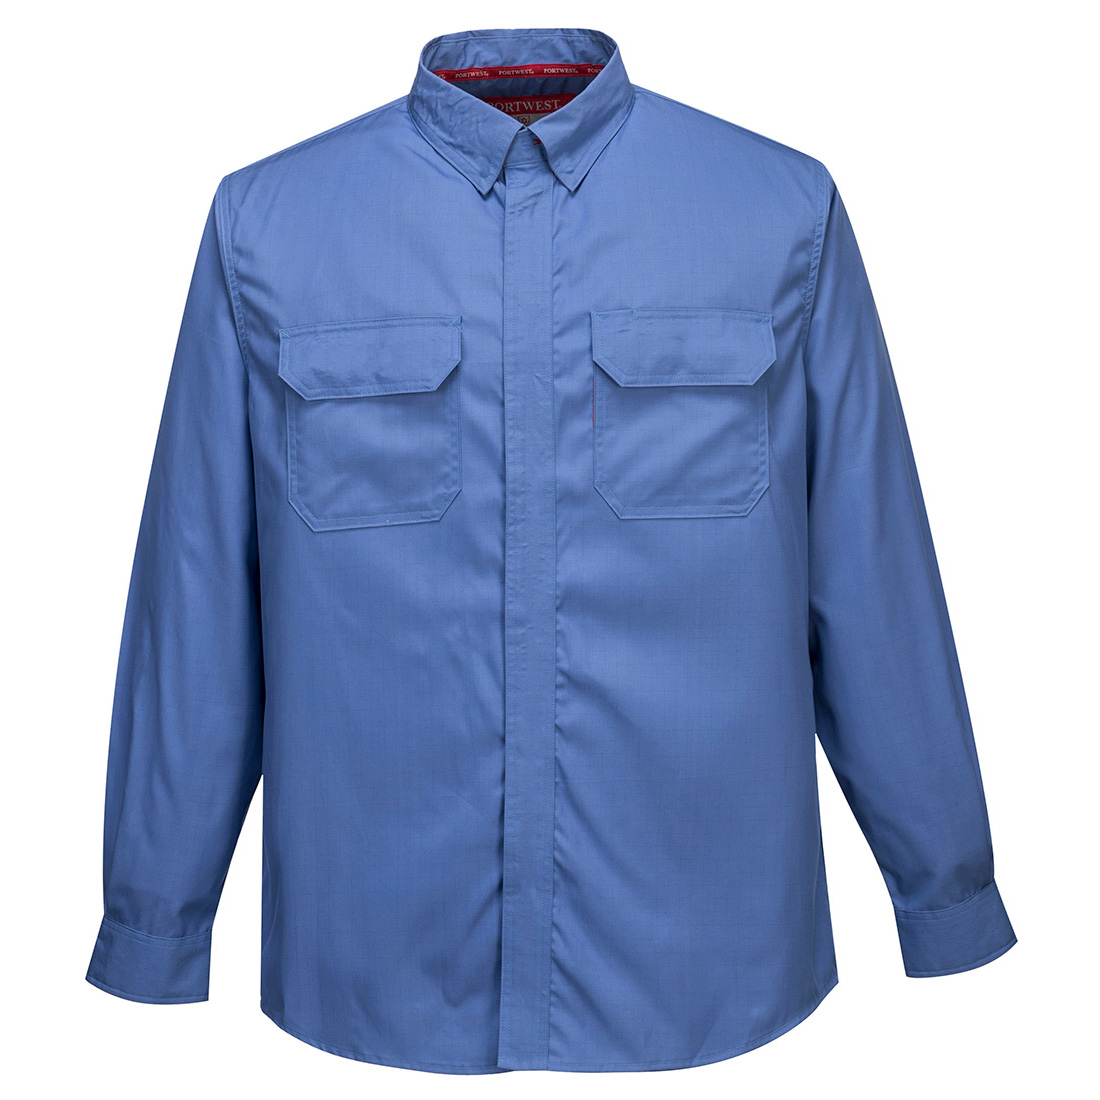 Bizflame Plus Shirt - Blue